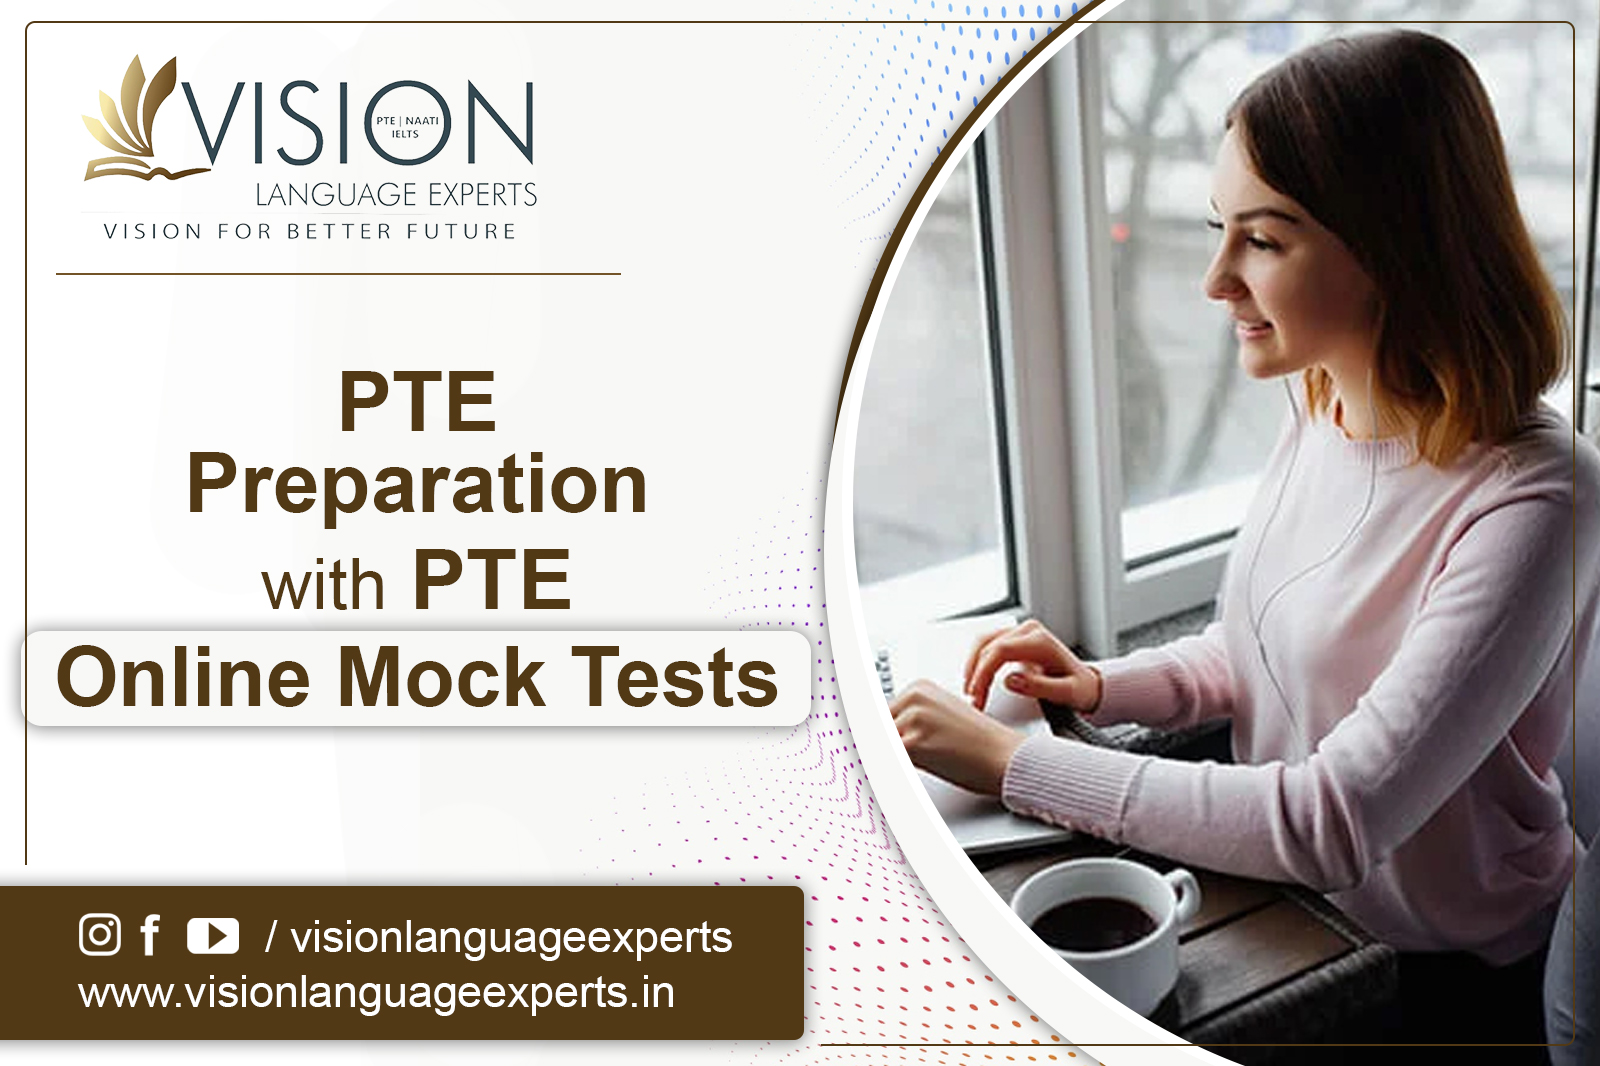 Excelling in PTE Vision Language Experts Sets the Standard for Online Mock Tests - Excelling in PTE Vision Language Experts Sets the Standard for Online Mock Tests